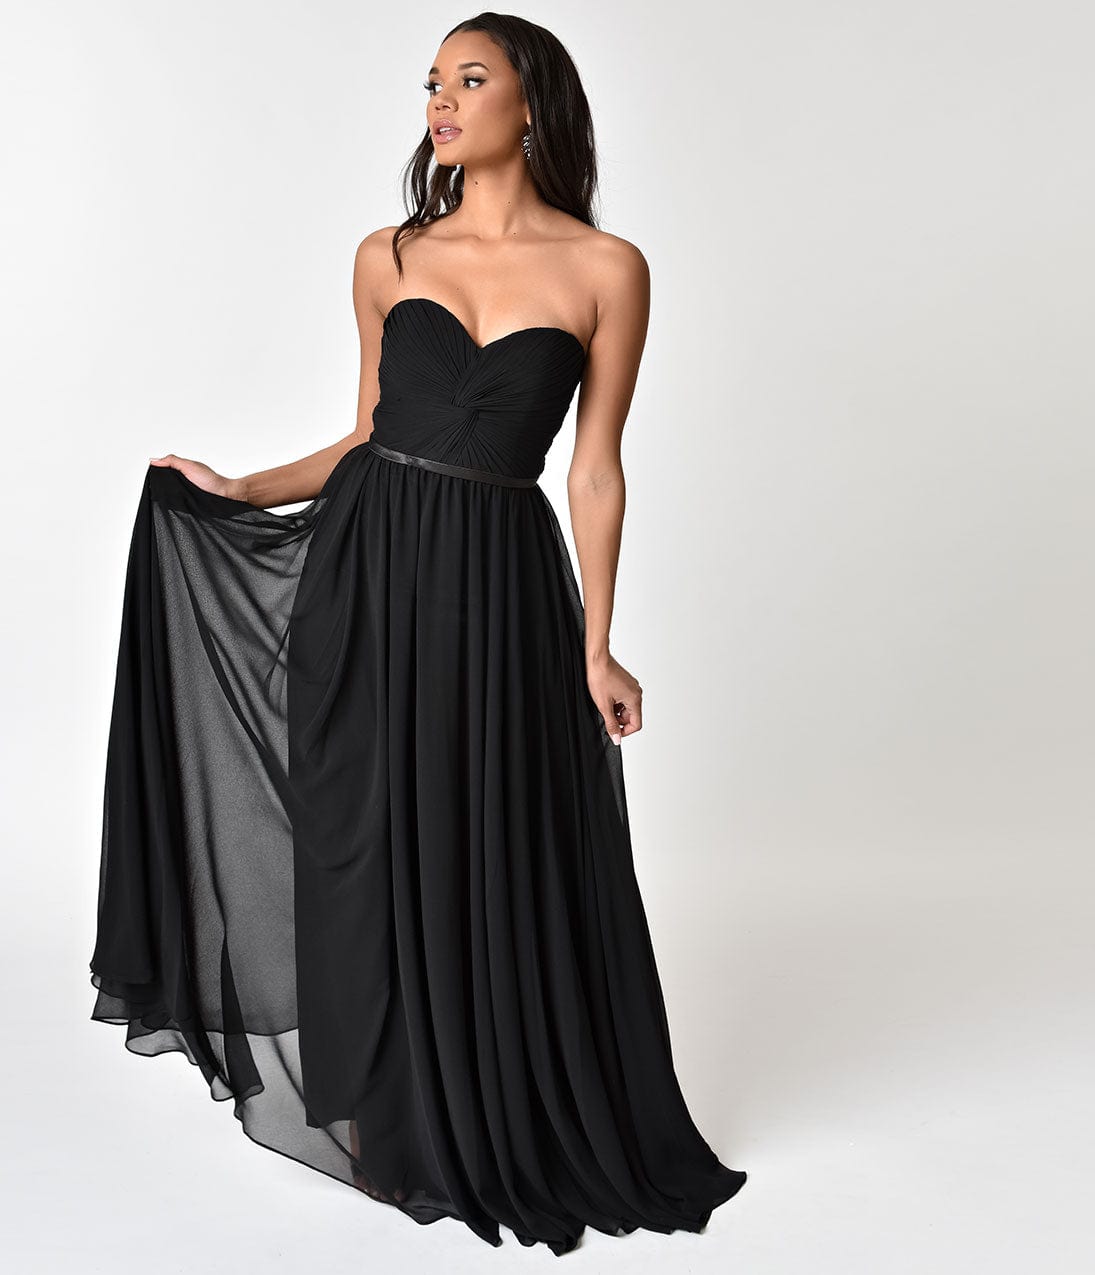 Black Chiffon Strapless Sweetheart Corset Long Gown